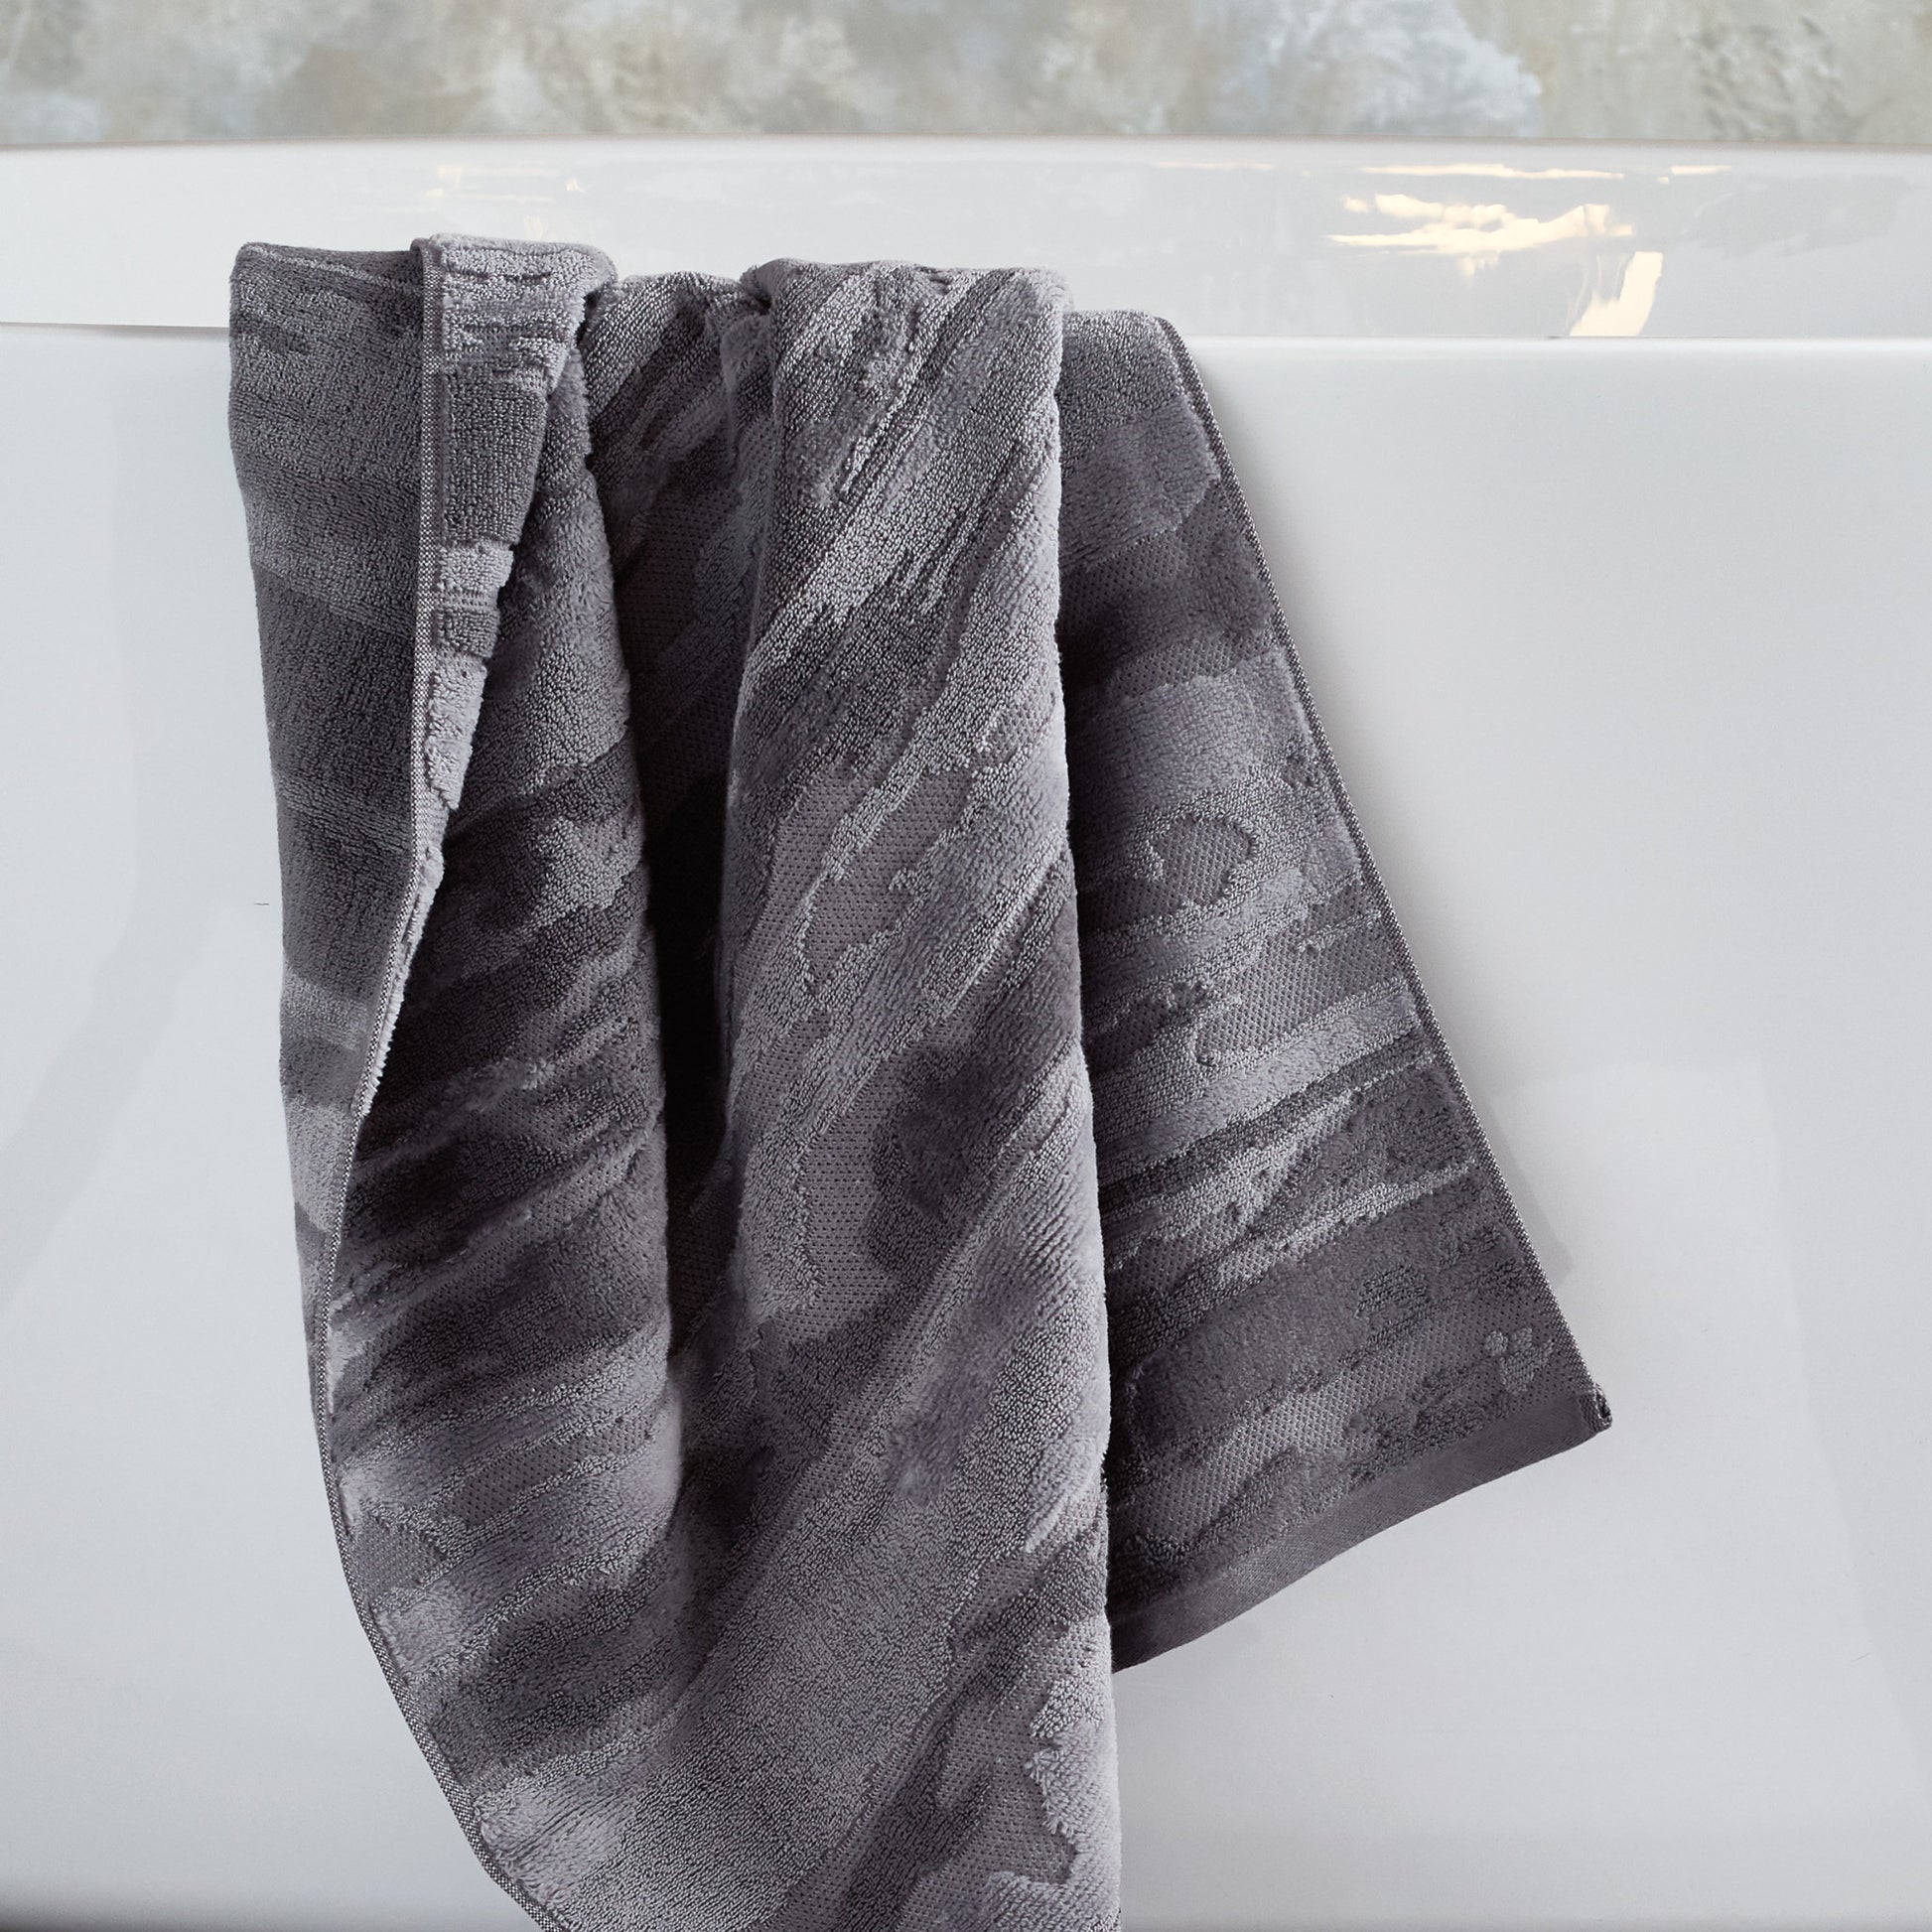 Tommy Hilfiger Bath Towel Collection 100% Cott